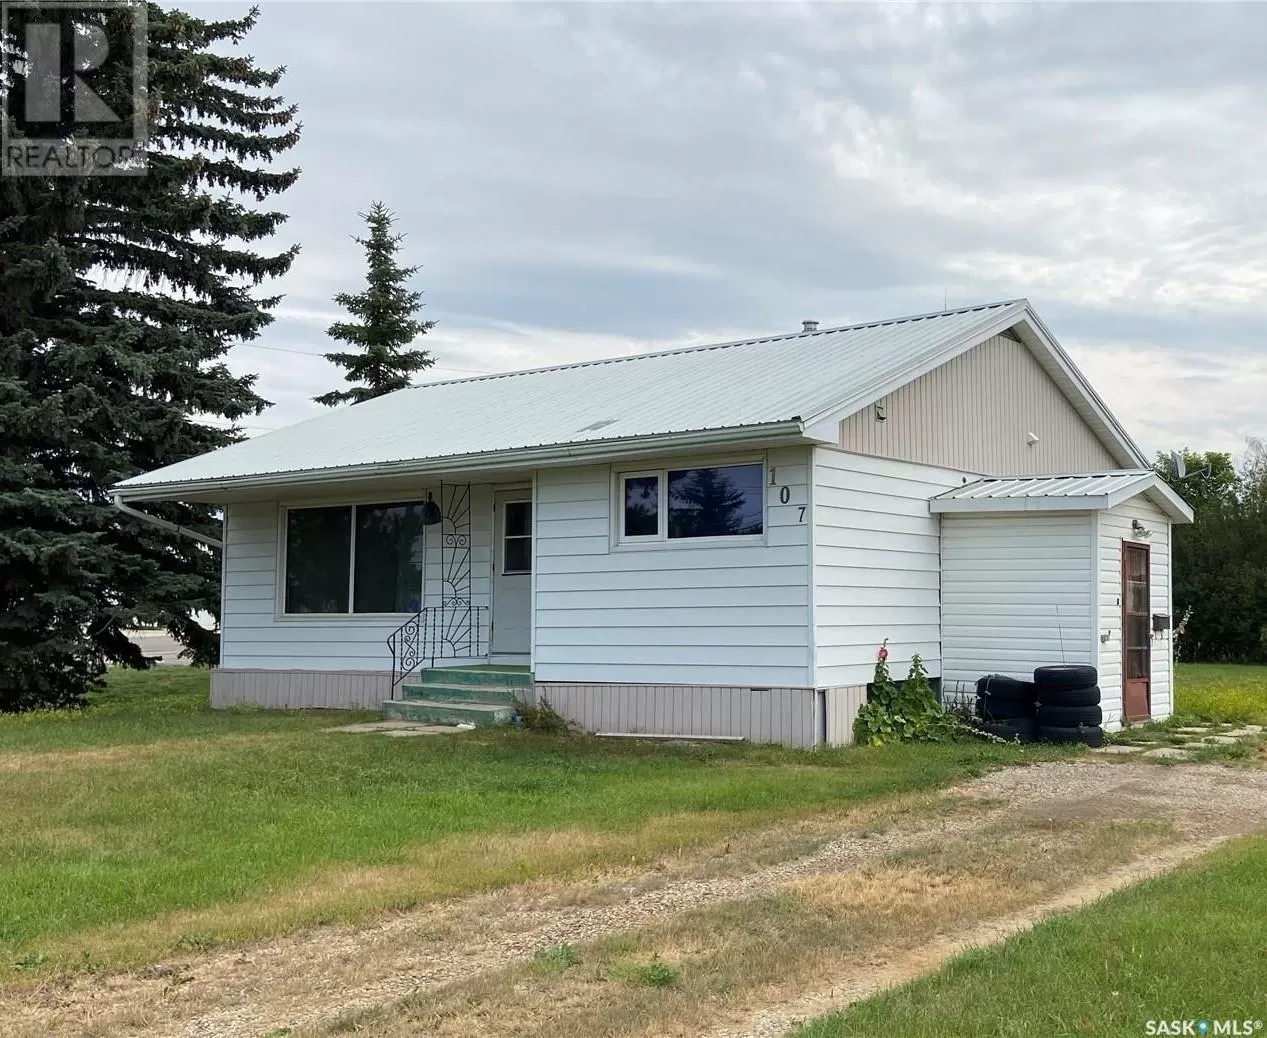 House for rent: 107 Main Street, Lanigan, Saskatchewan S0K 2M0